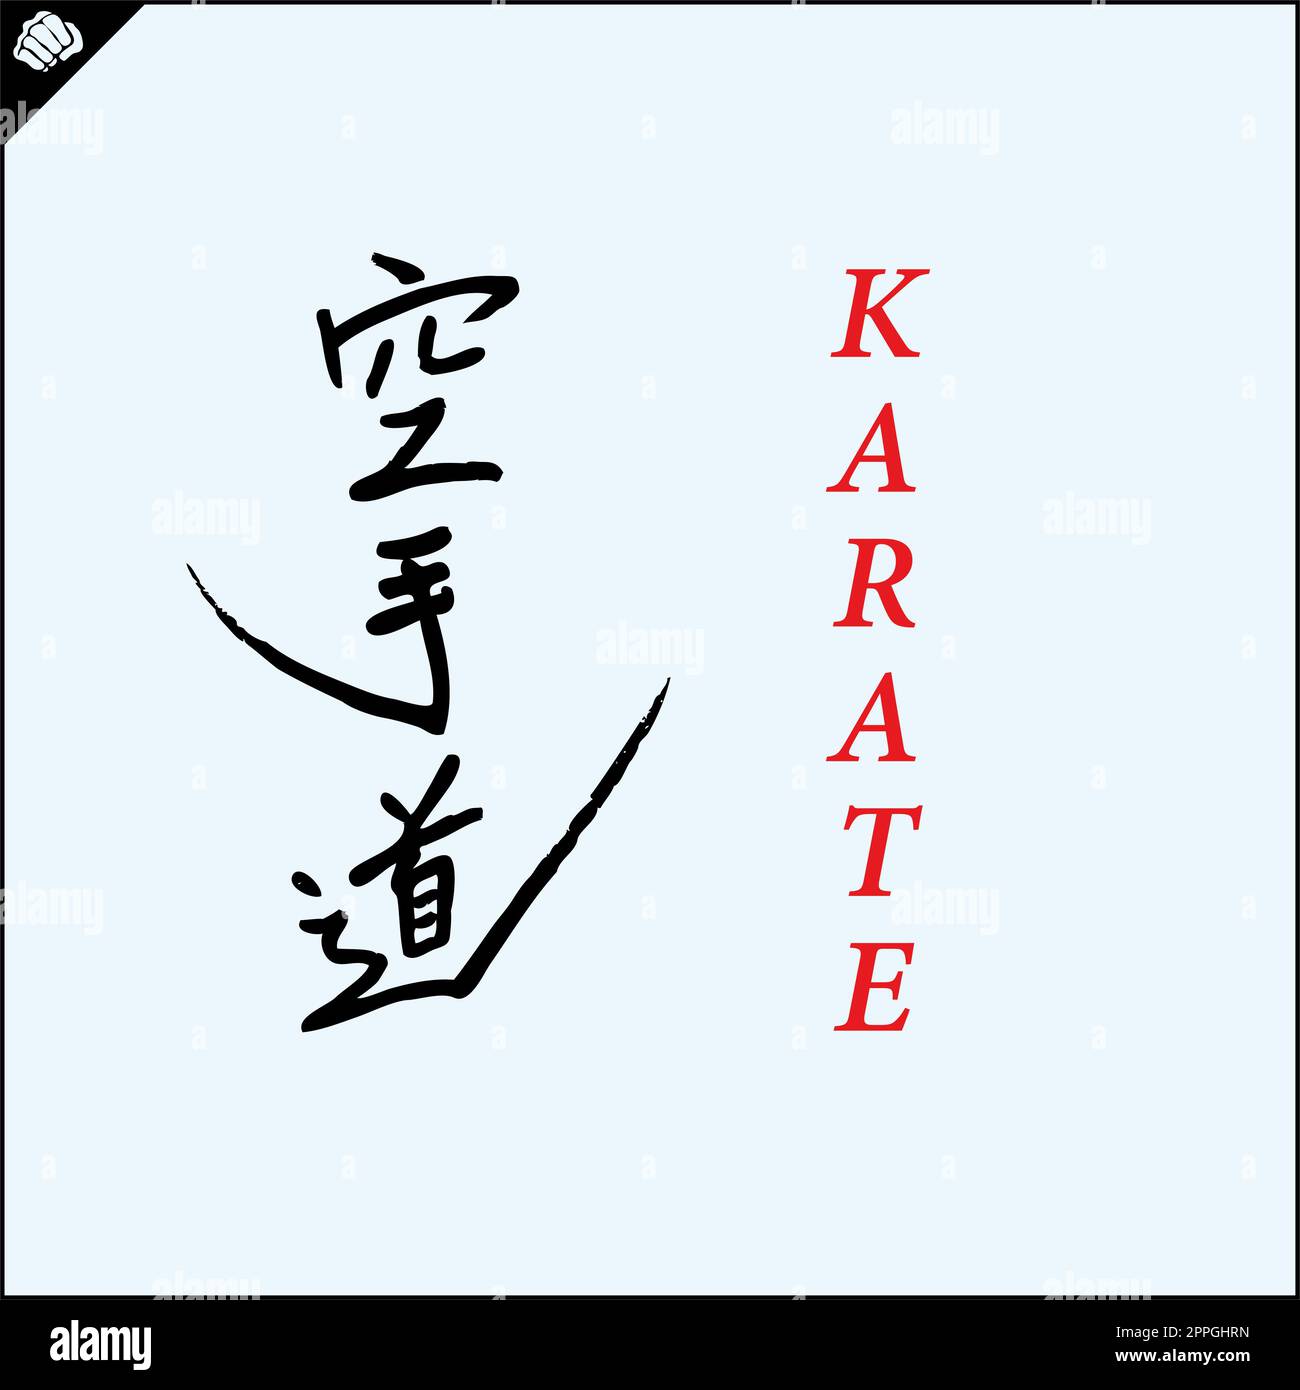 karatekid' in Tattoos • Search in +1.3M Tattoos Now • Tattoodo